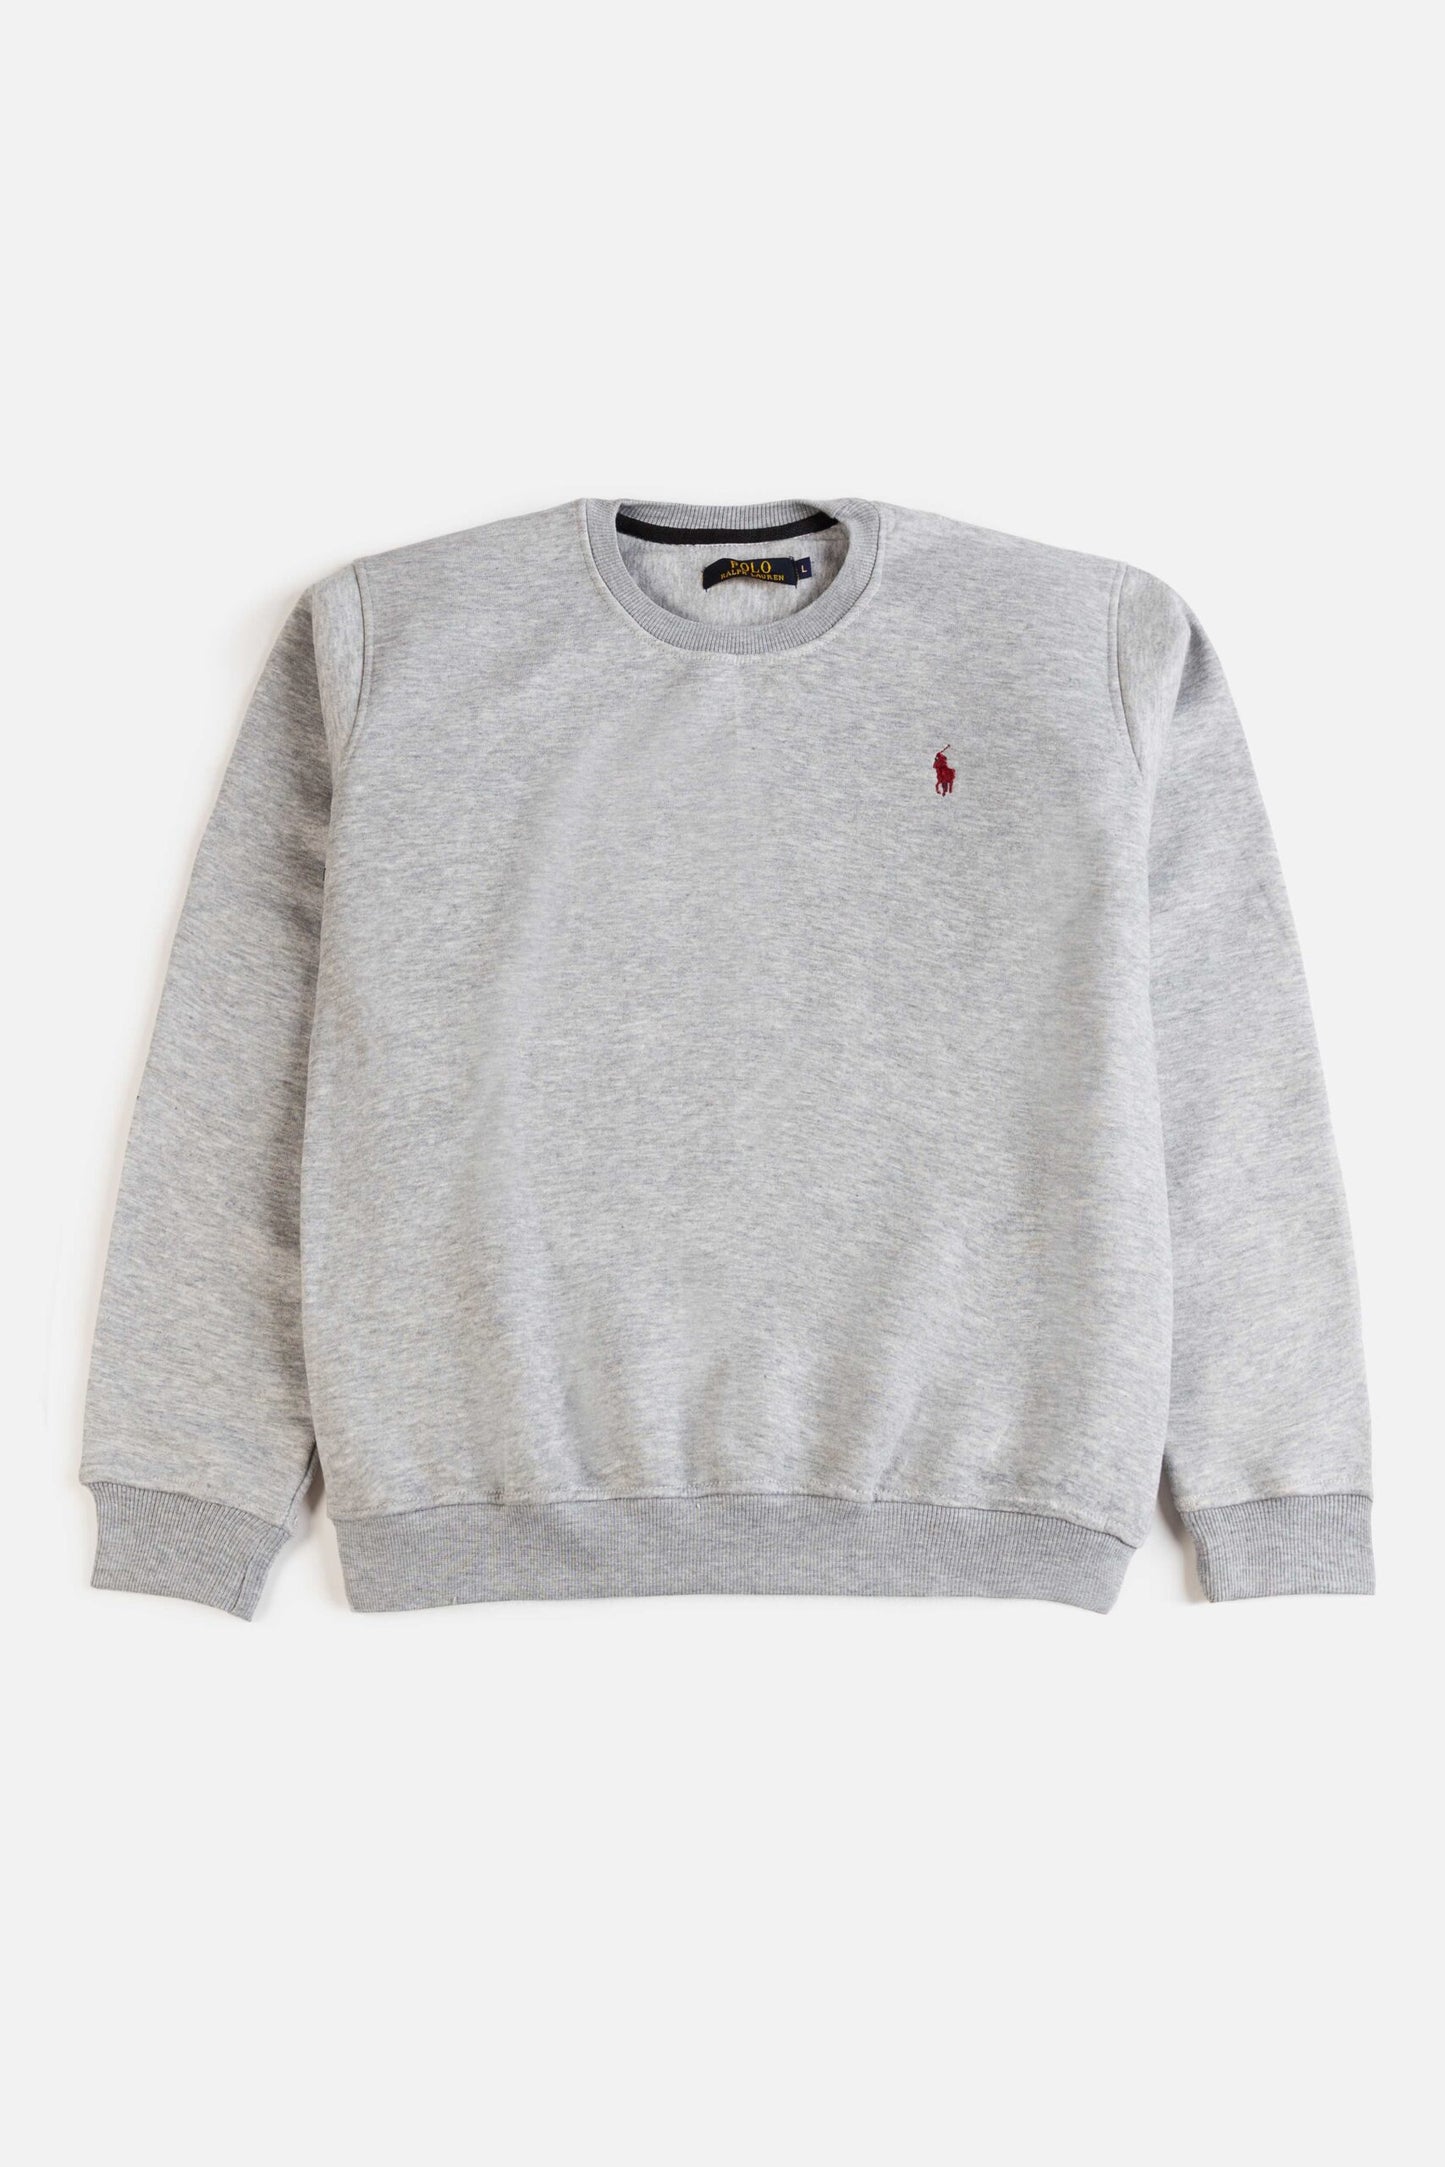 RL Premium Cotton Fleece Sweatshirt – Fog Gray